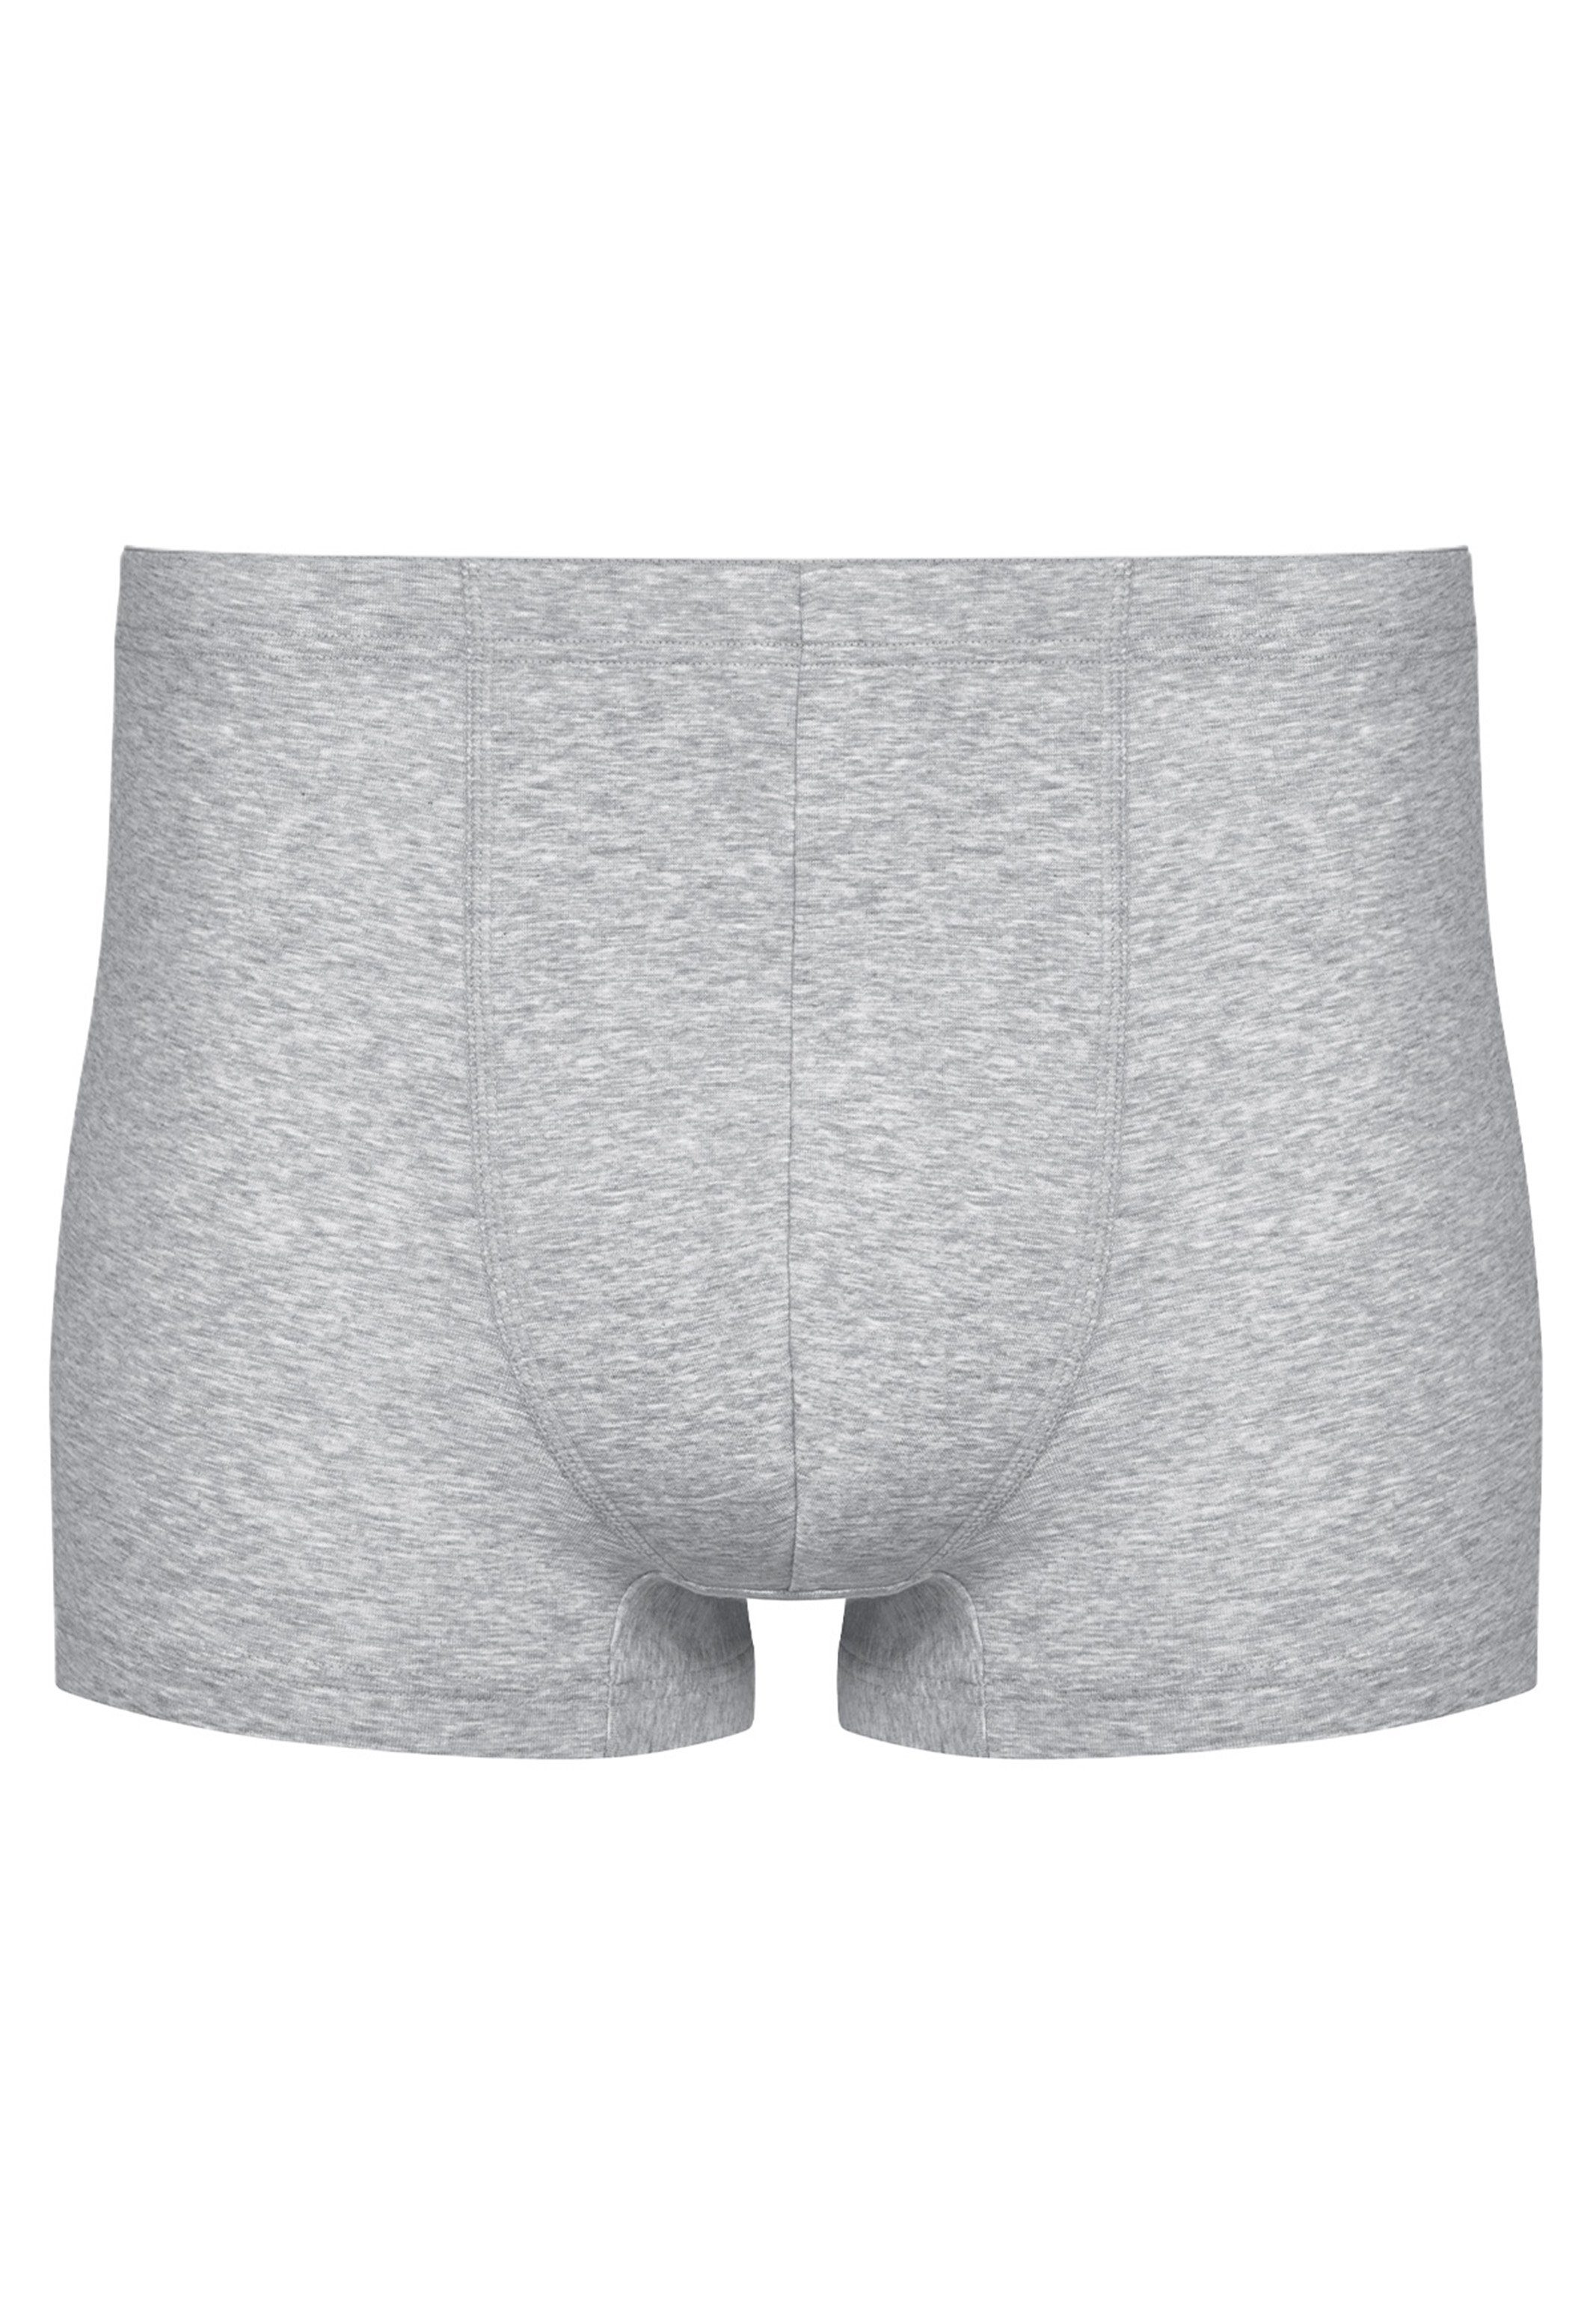 Mey Retro Boxer Casual / Light - Pant Cotton Ohne Eingriff - Short - Baumwolle Melange Retro Grey (1-St)